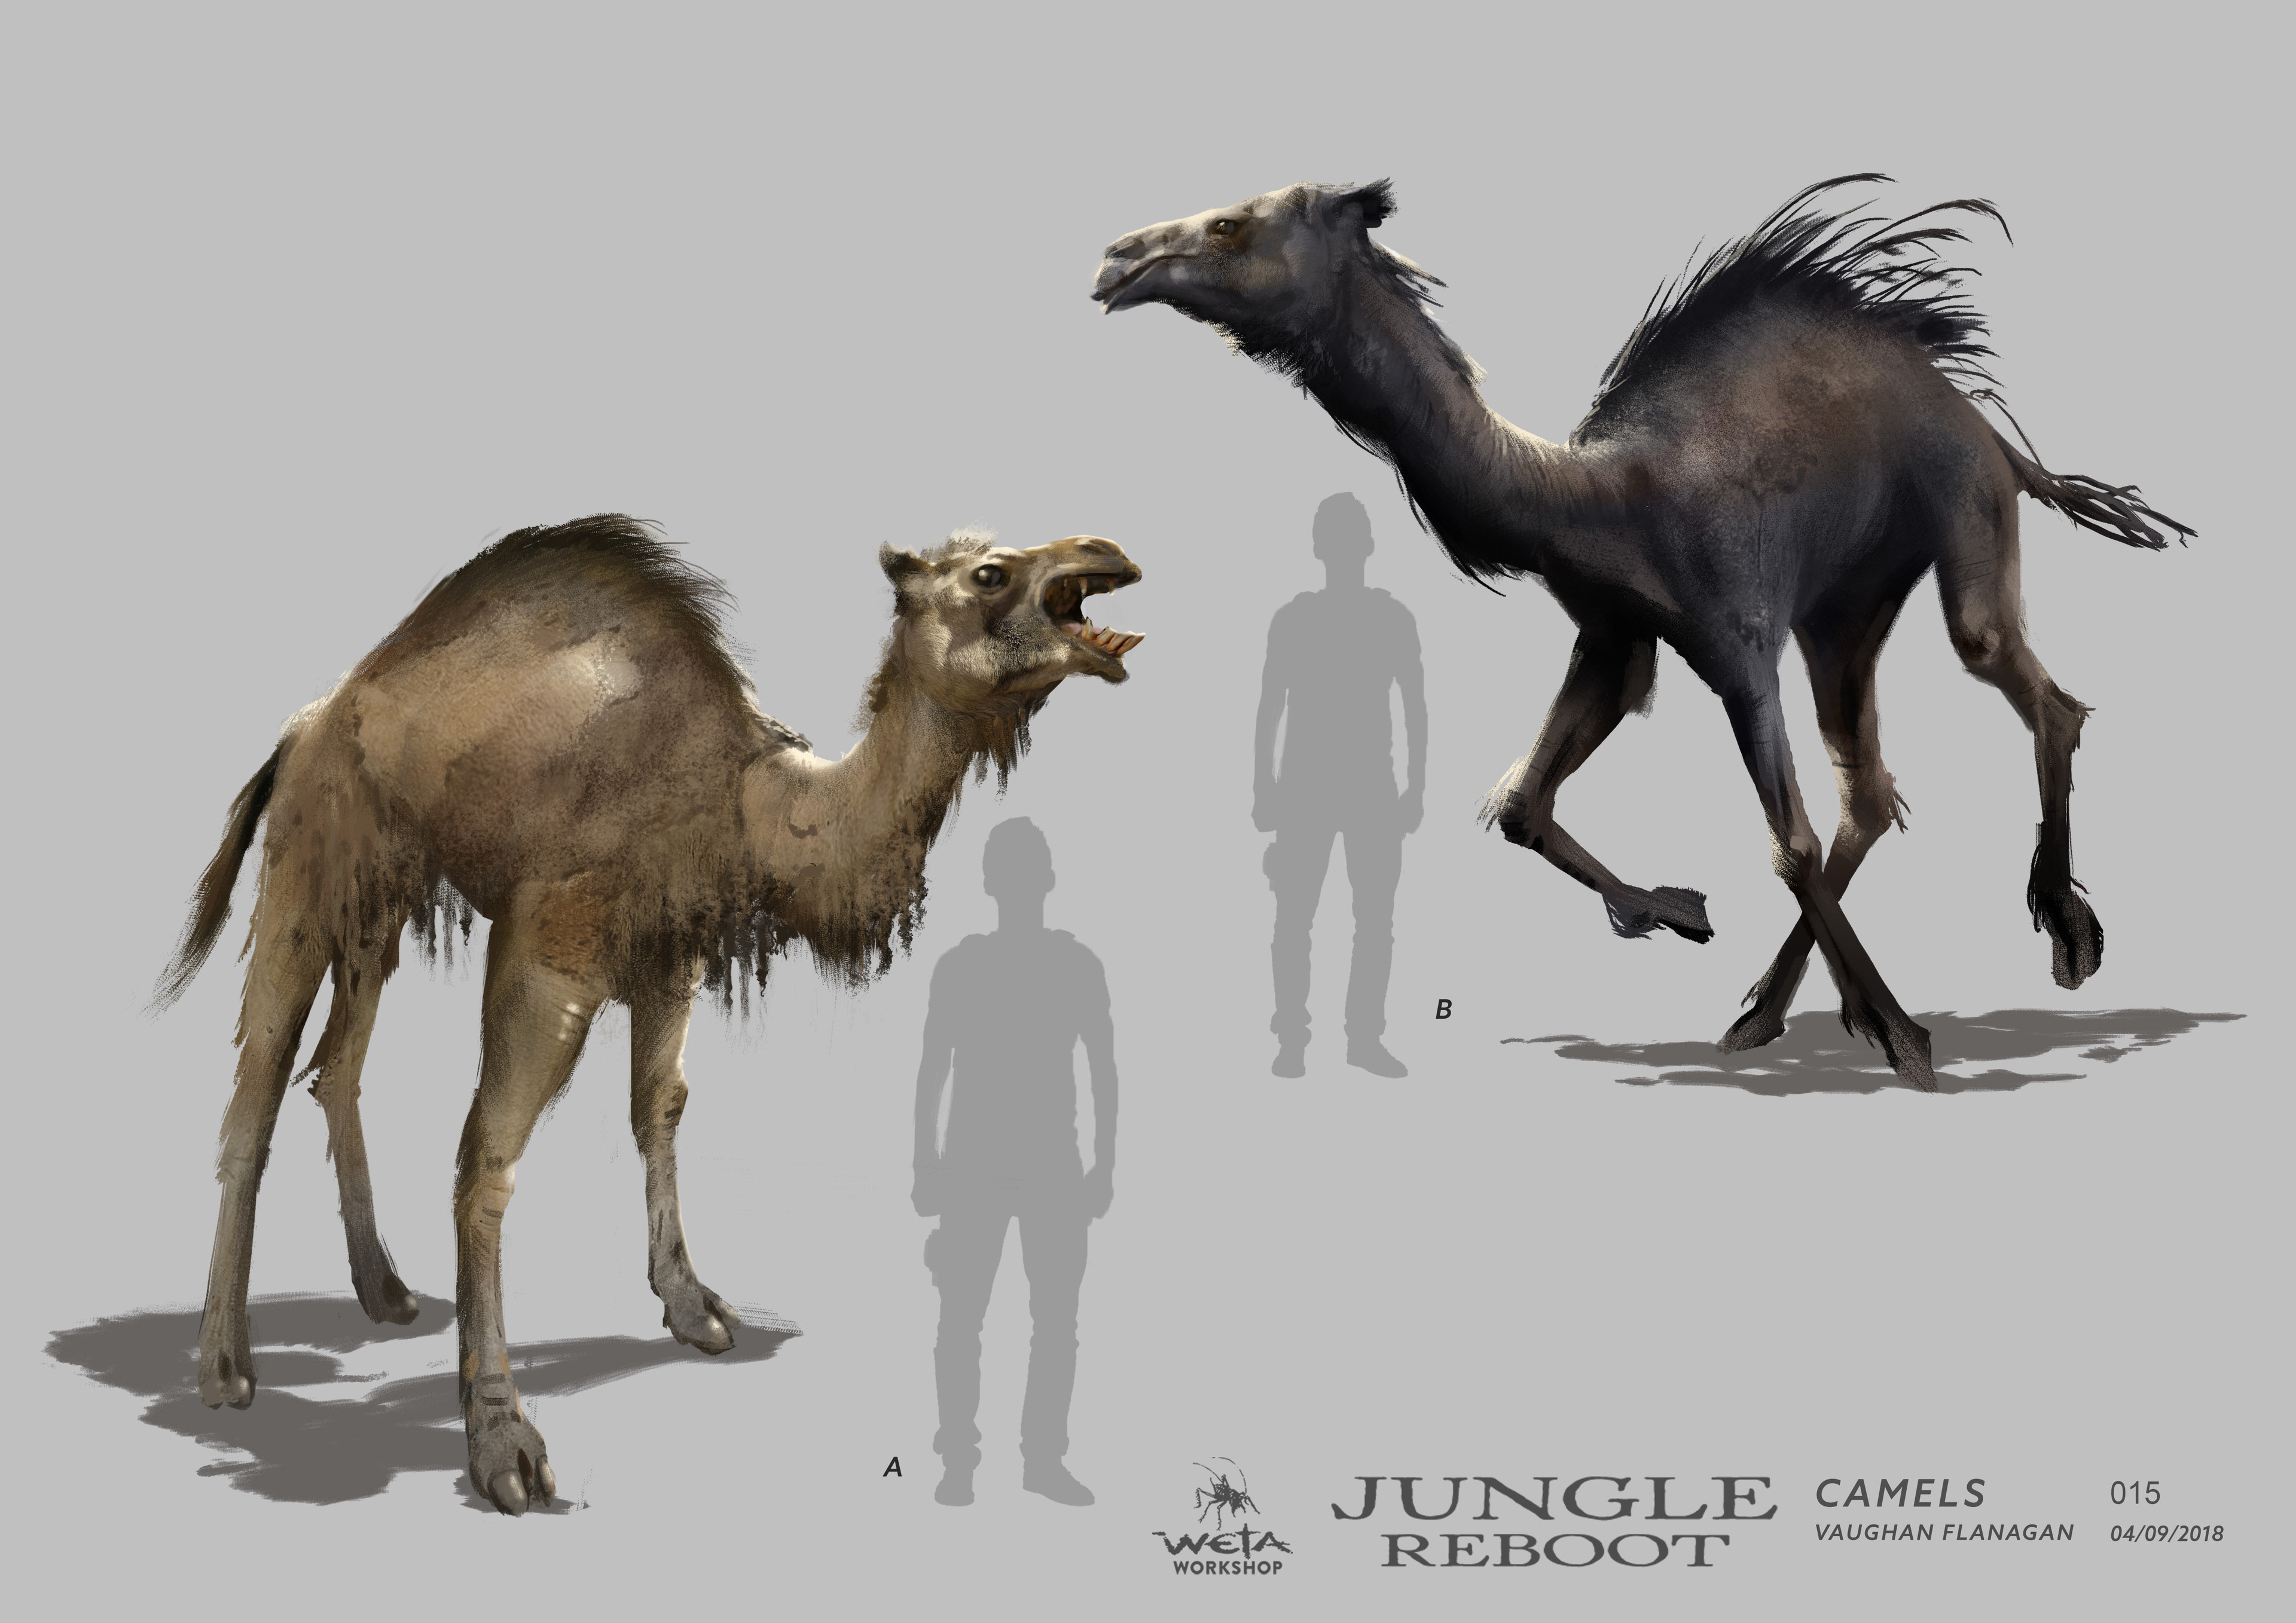 Camel Design - Artist: Vaughan Flanagan